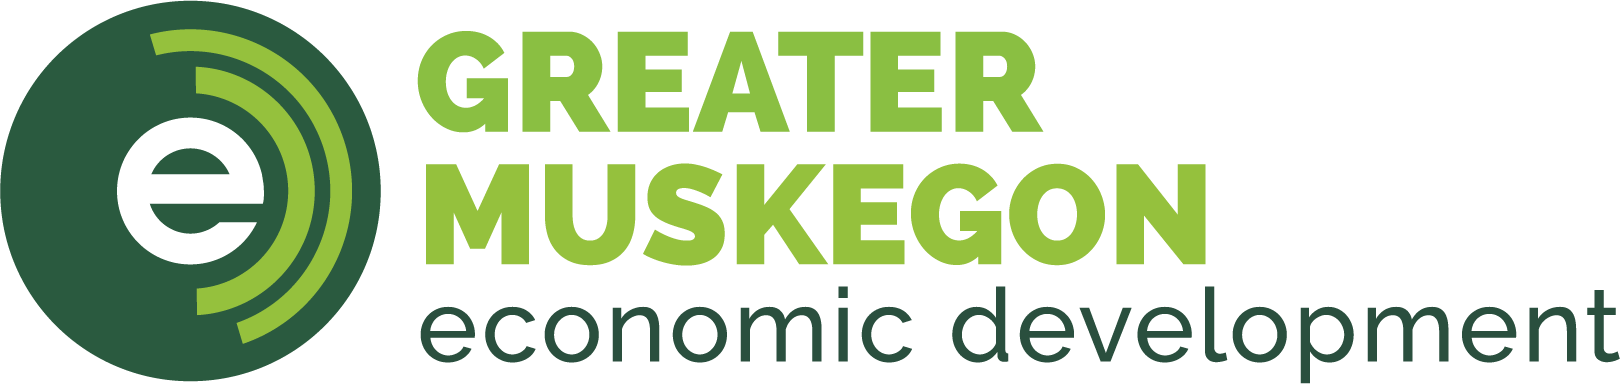 Greater Muskegon Economic Development